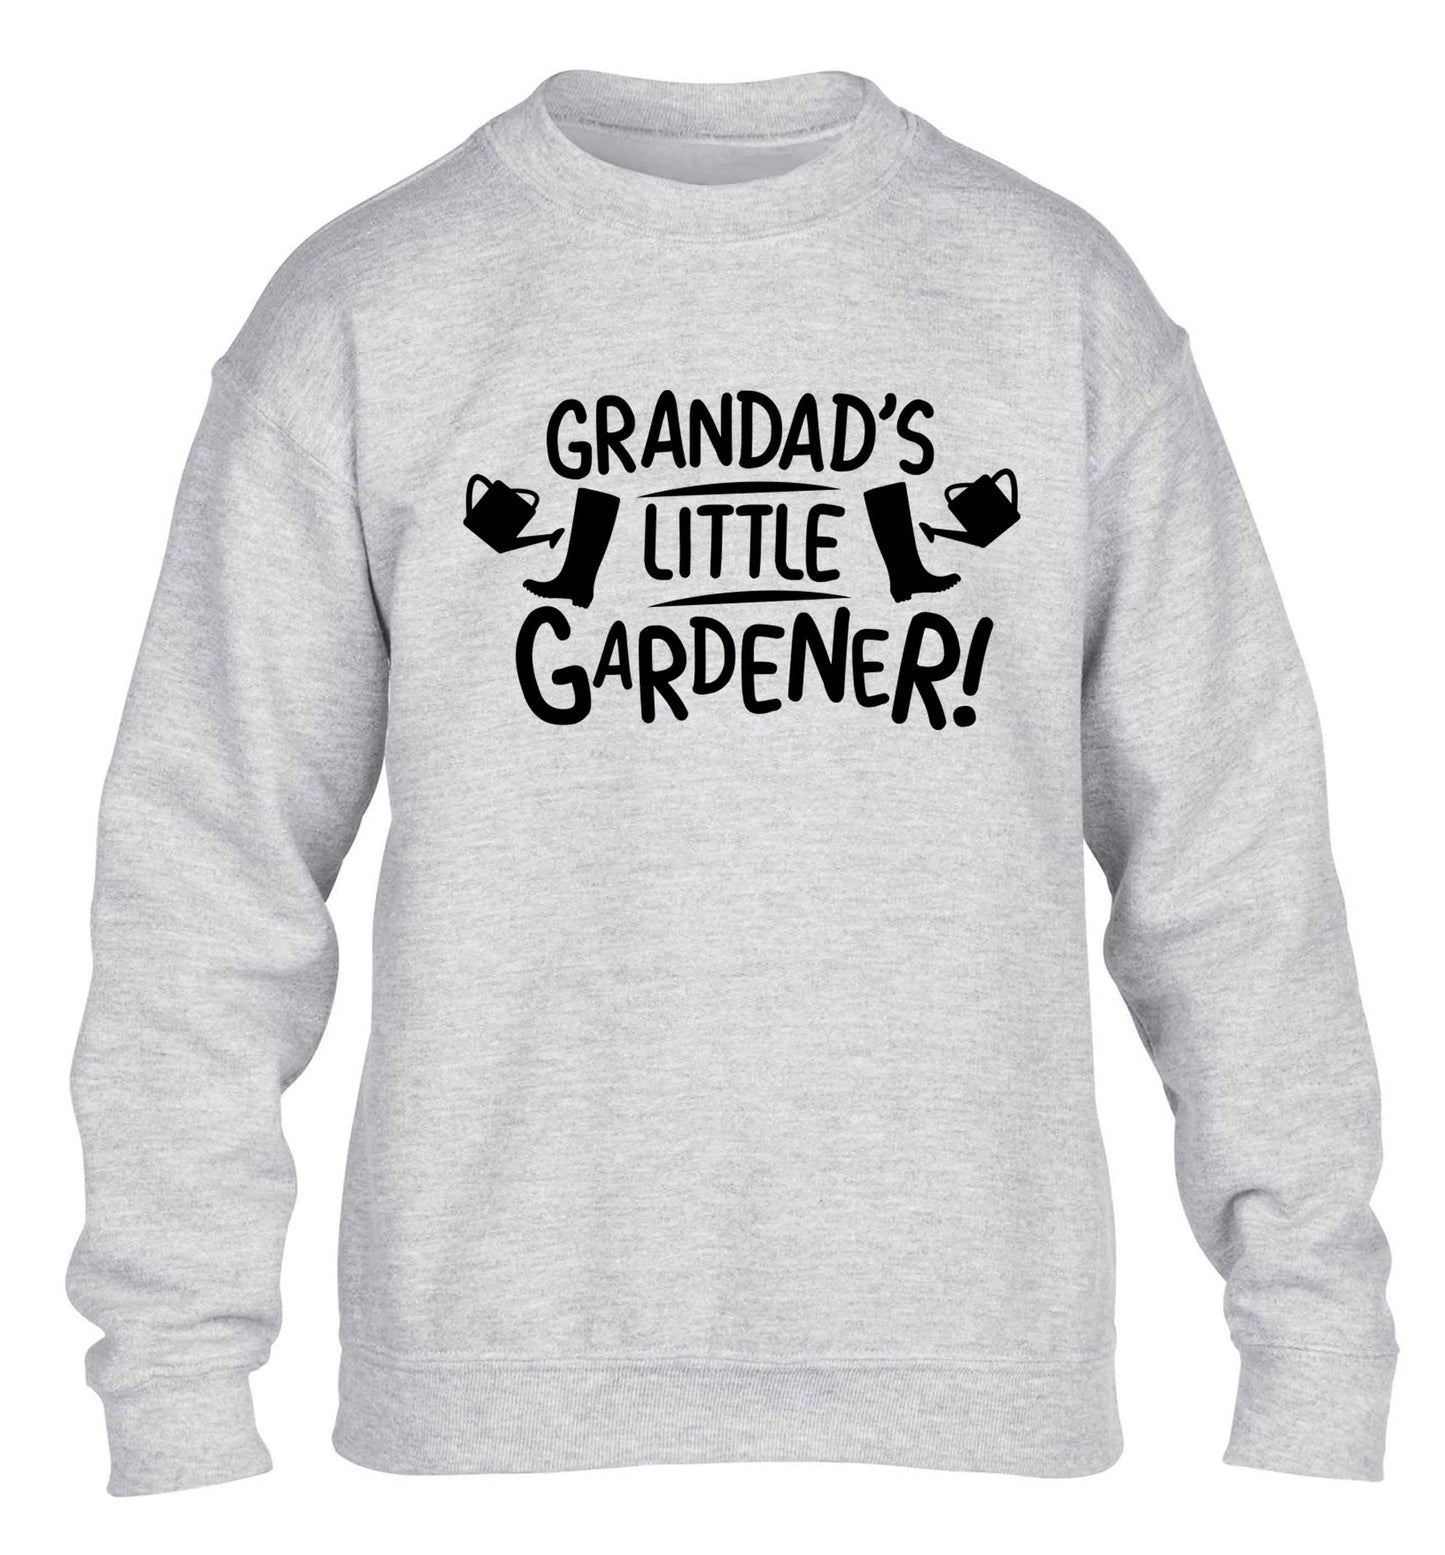 Grandad's little gardener children's grey sweater 12-13 Years